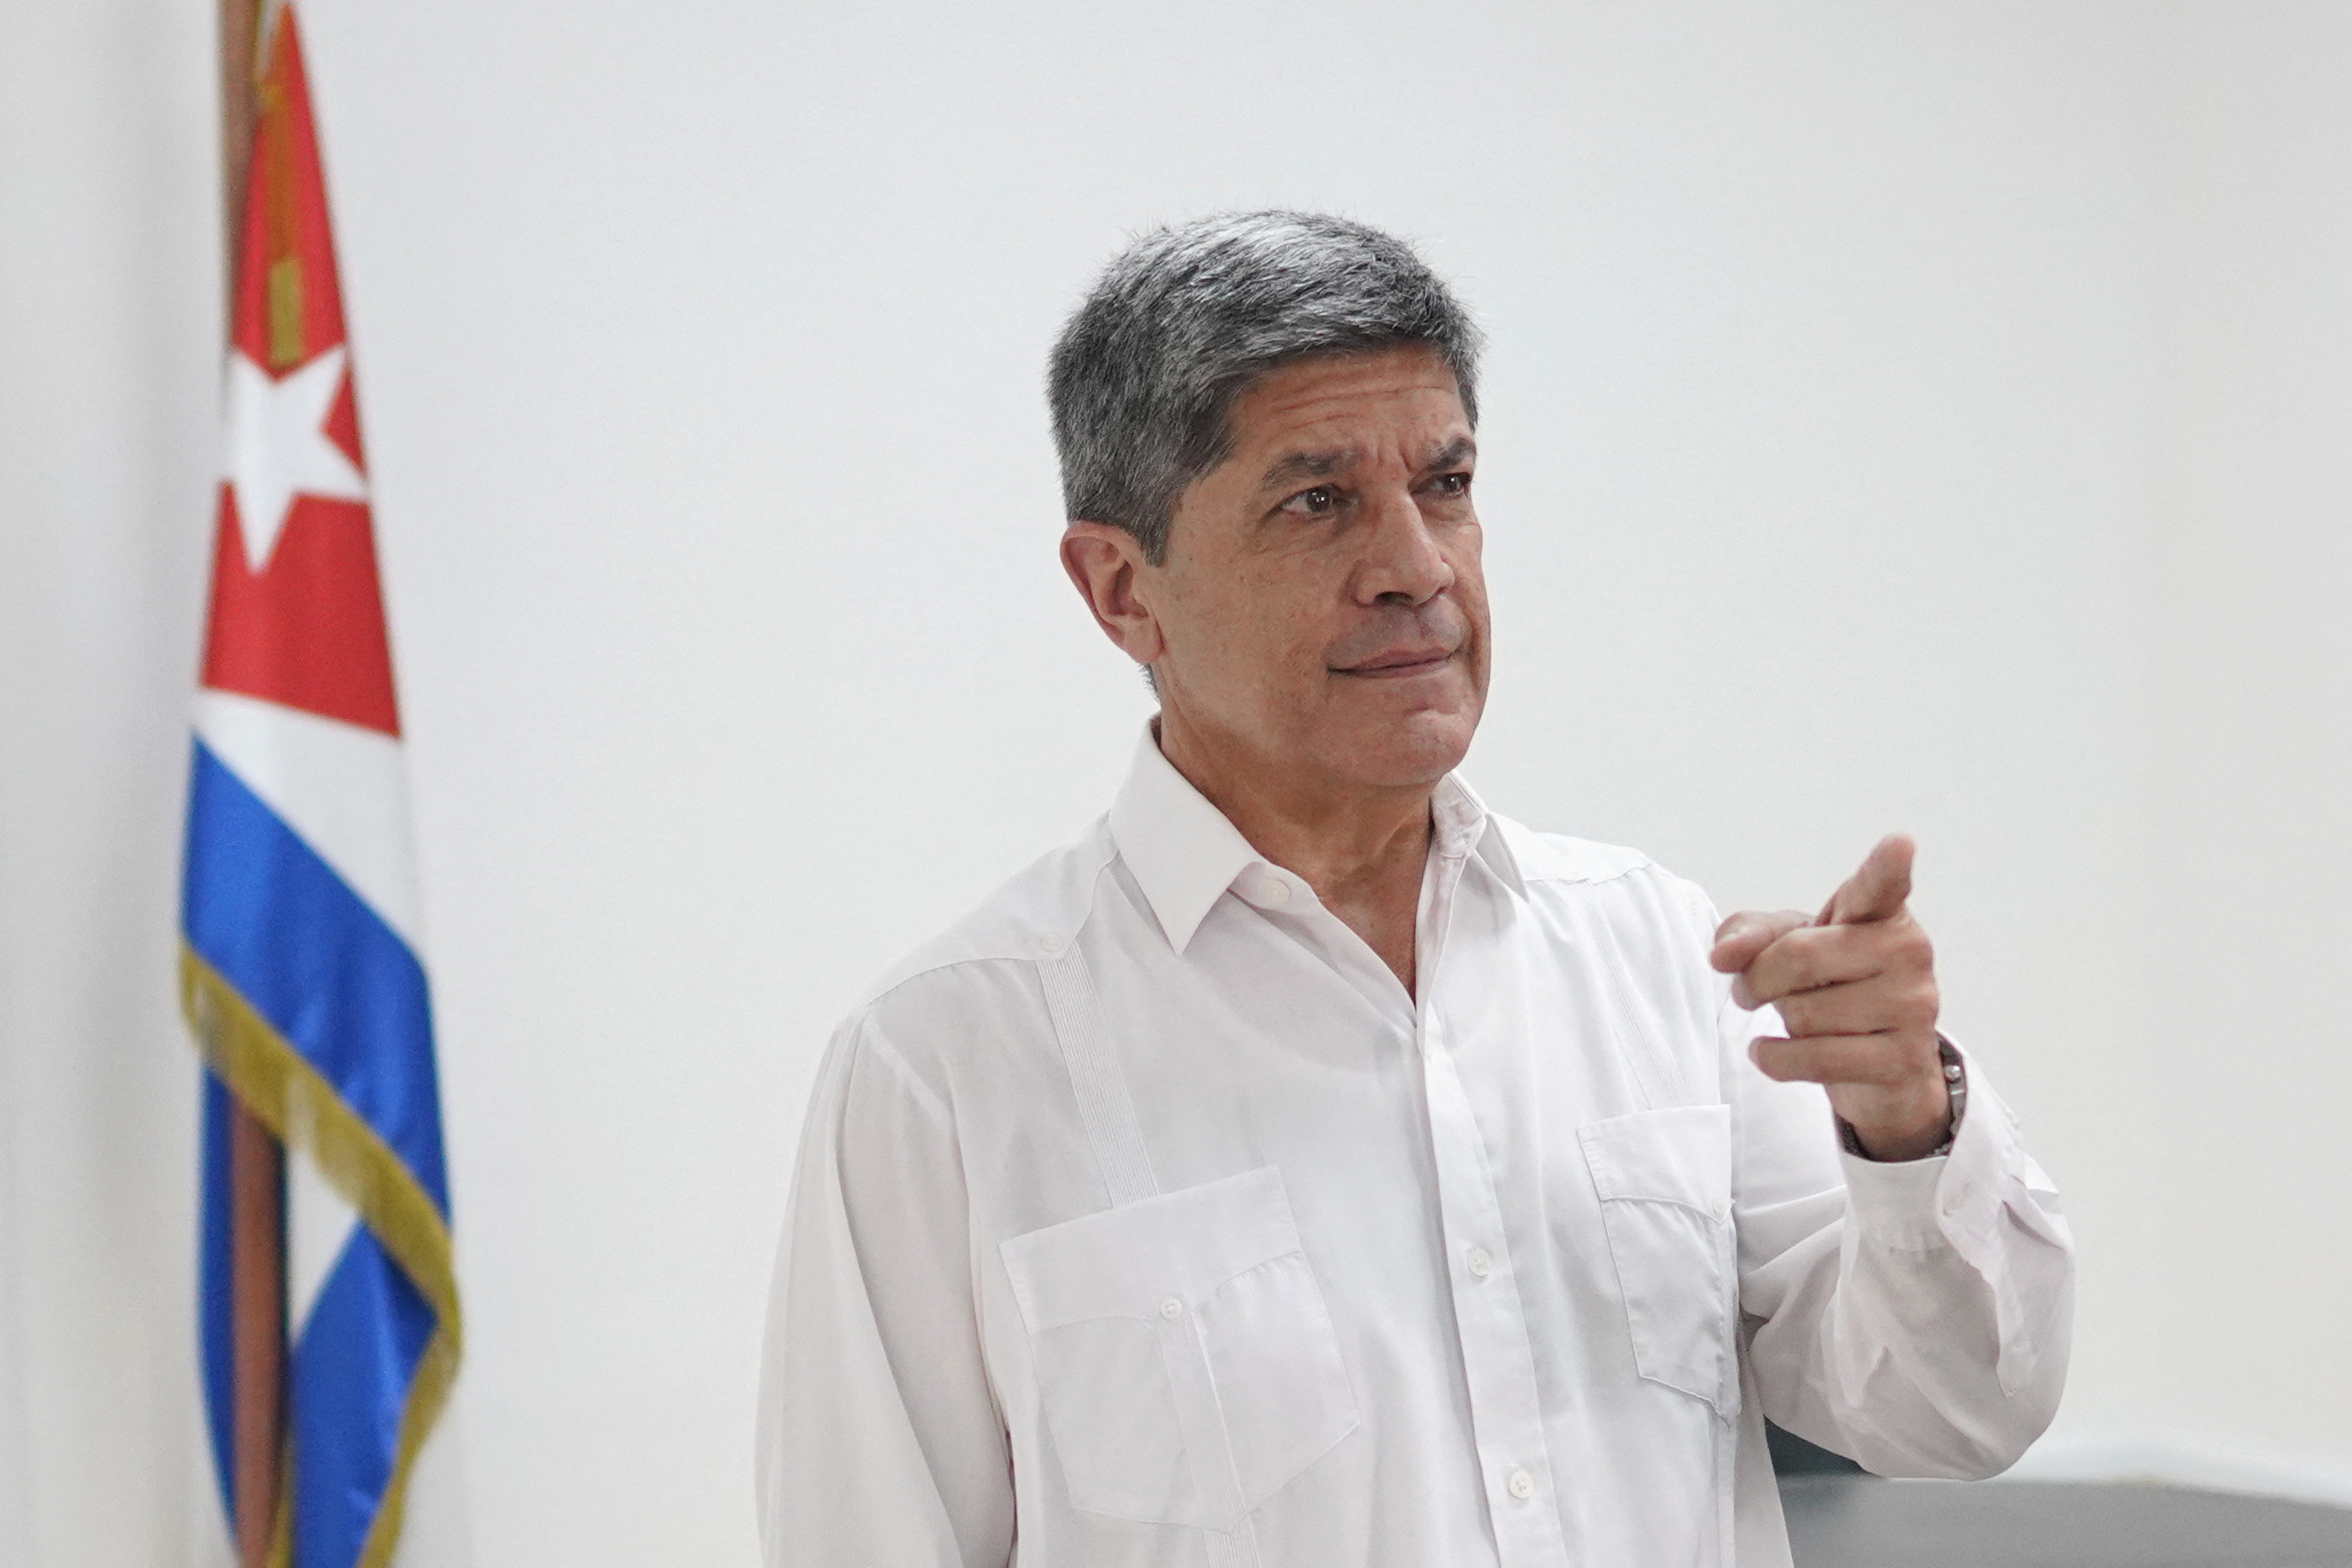 Cuba's Deputy Minister of Foreign Affairs Carlos Fernandez de Cossio speaks with Reuters in Havana